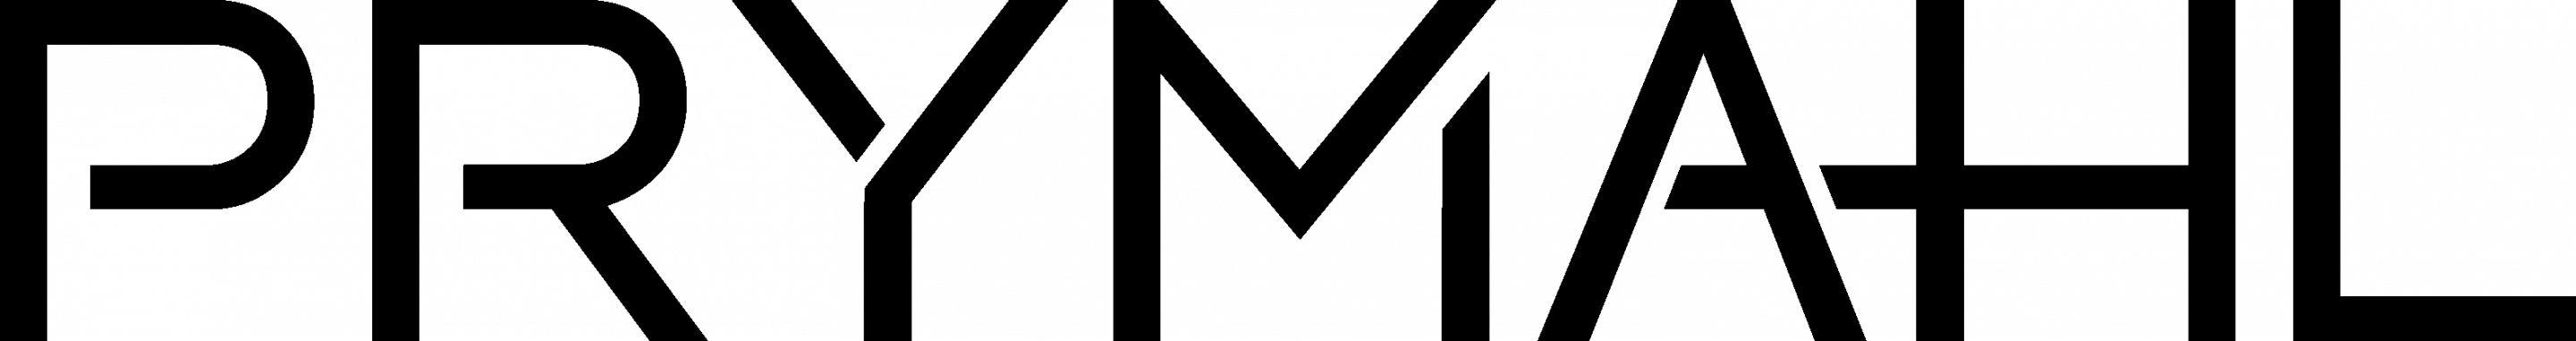 logo Prymahl noir